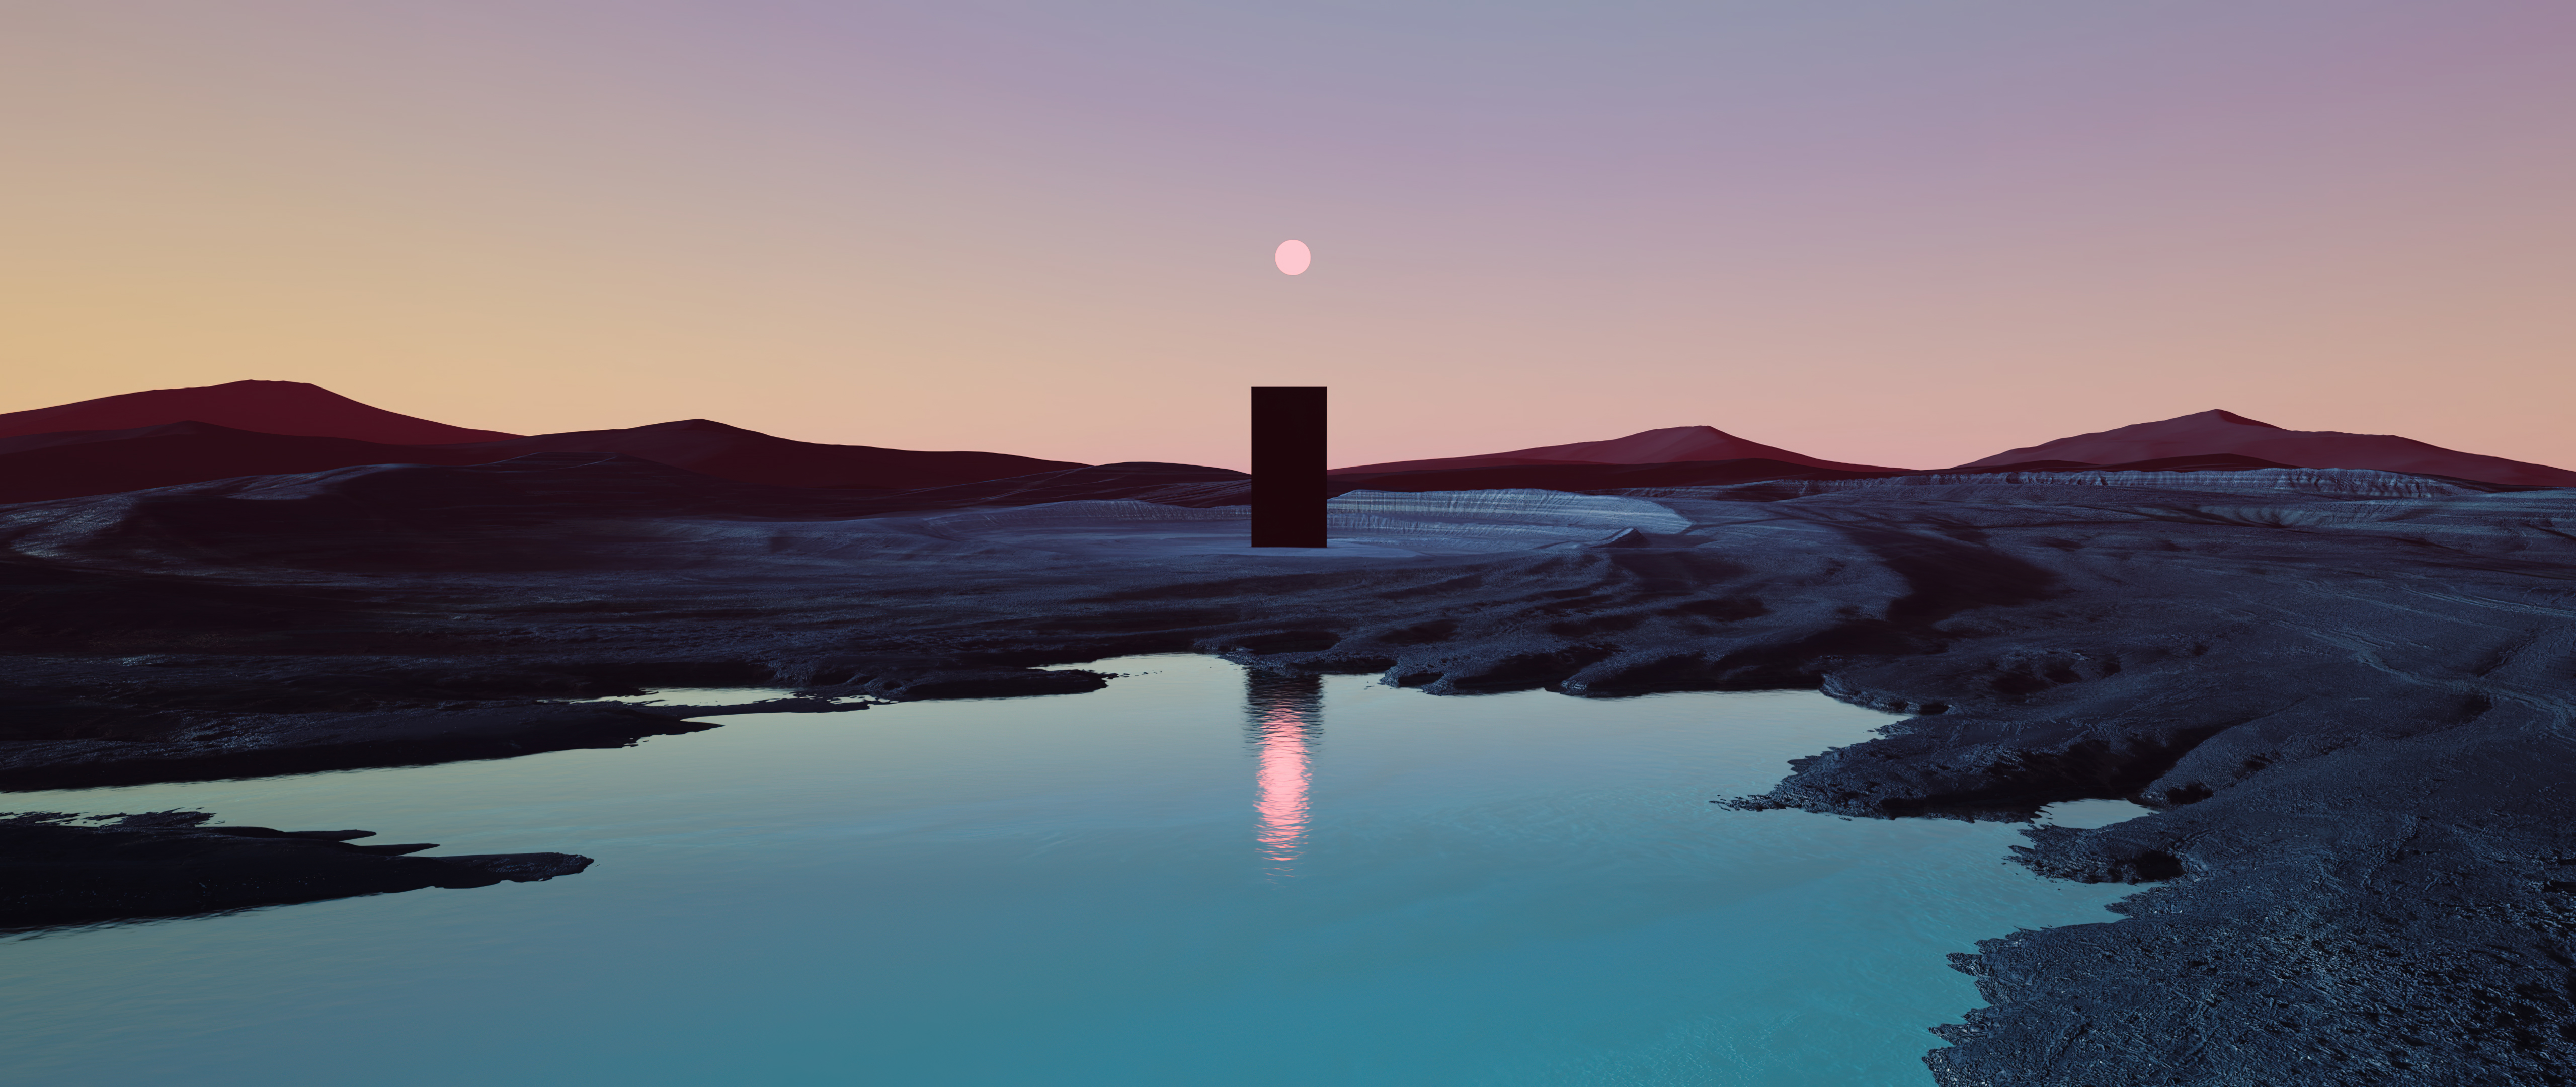 Landscape Abstract CGi Mountains Monolith Sunset Lake Reflection Ultrawide Nature Desert Surreal Sky 5120x2160